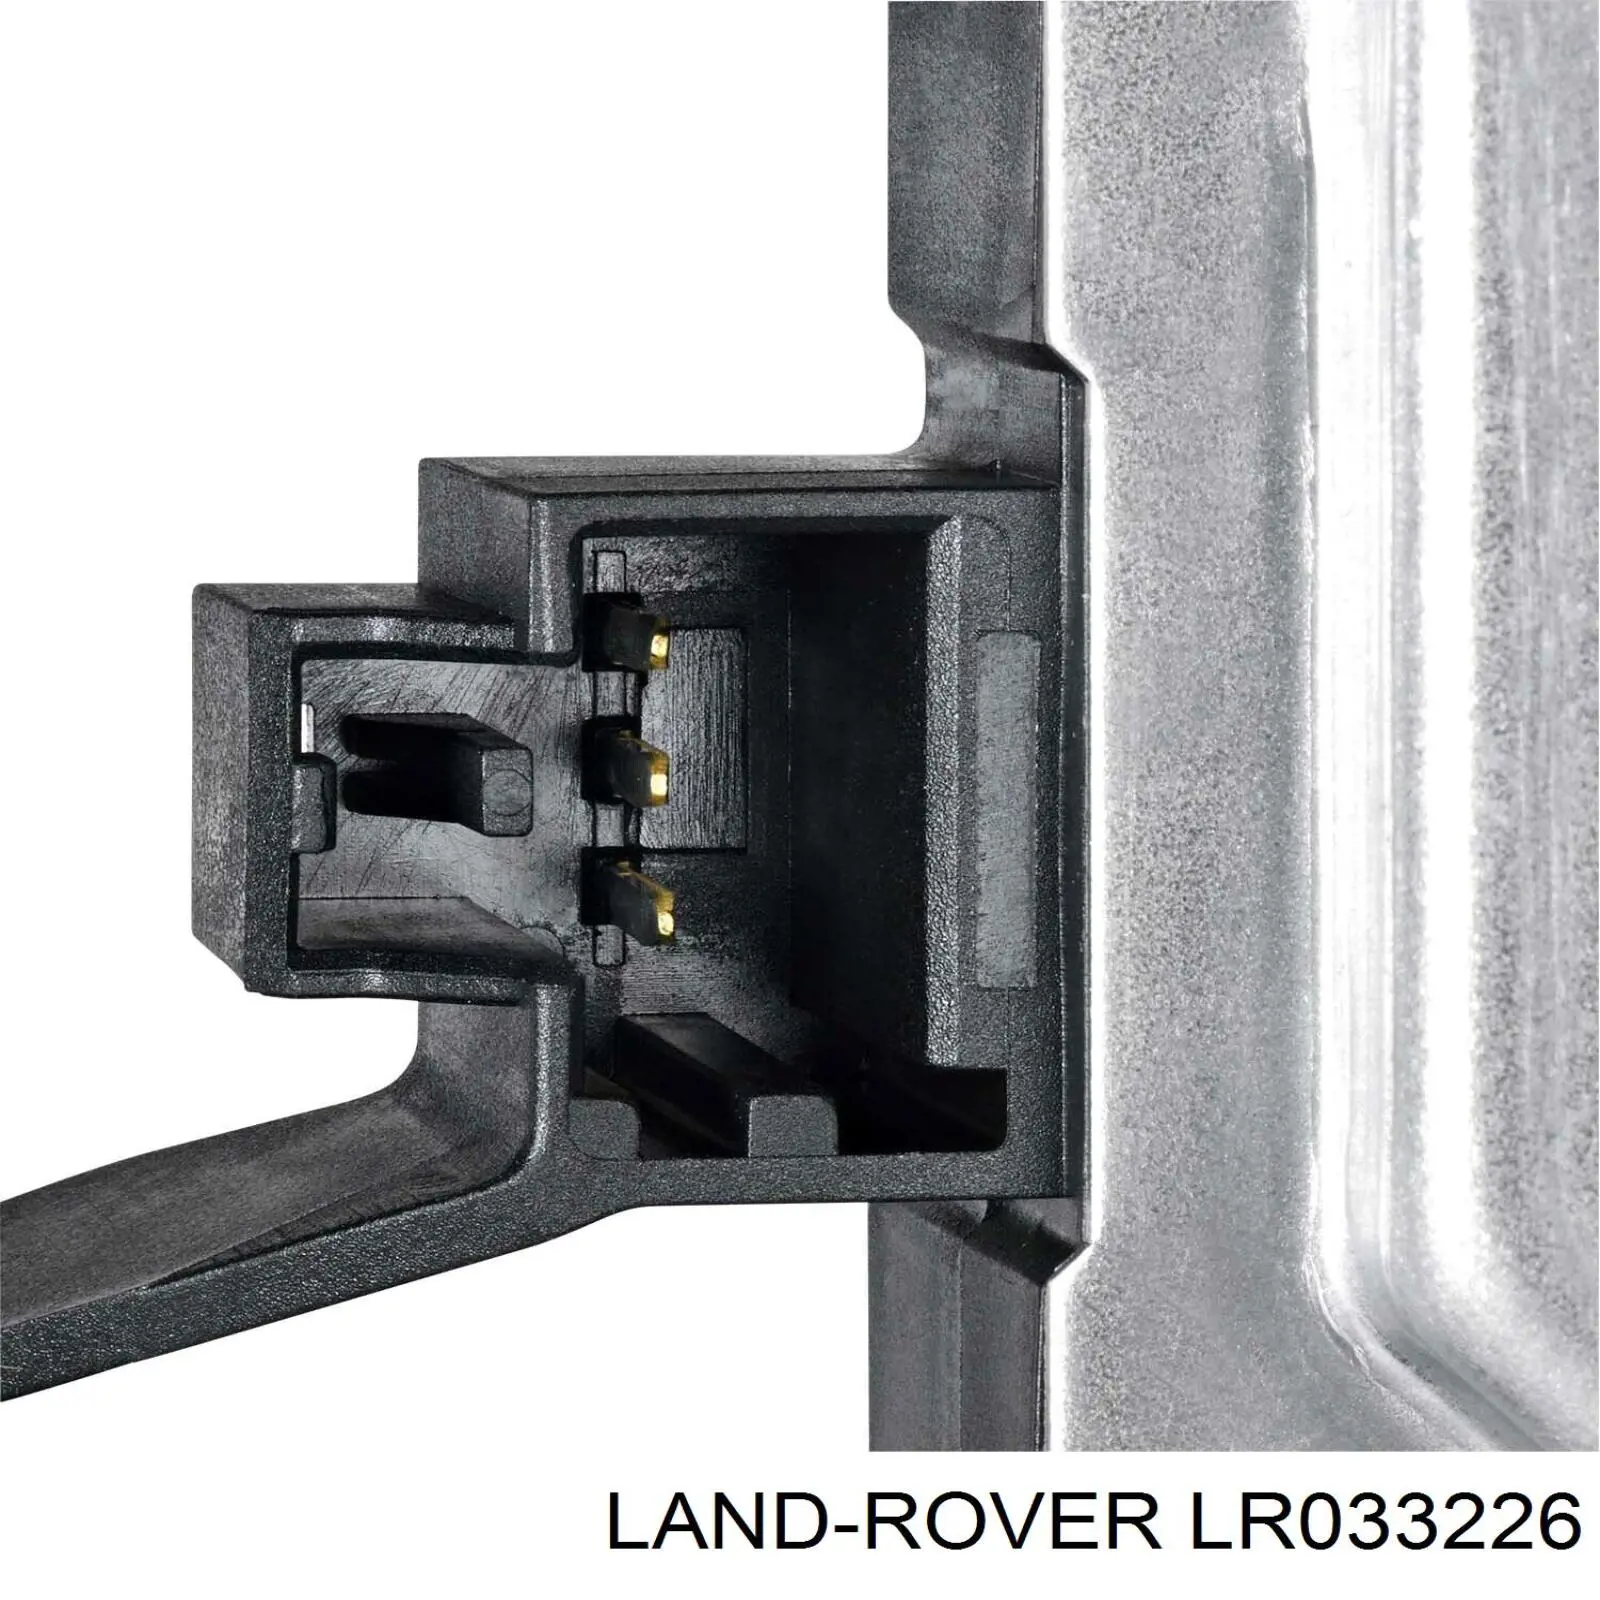 LR033226 Land Rover motor limpiaparabrisas, trasera